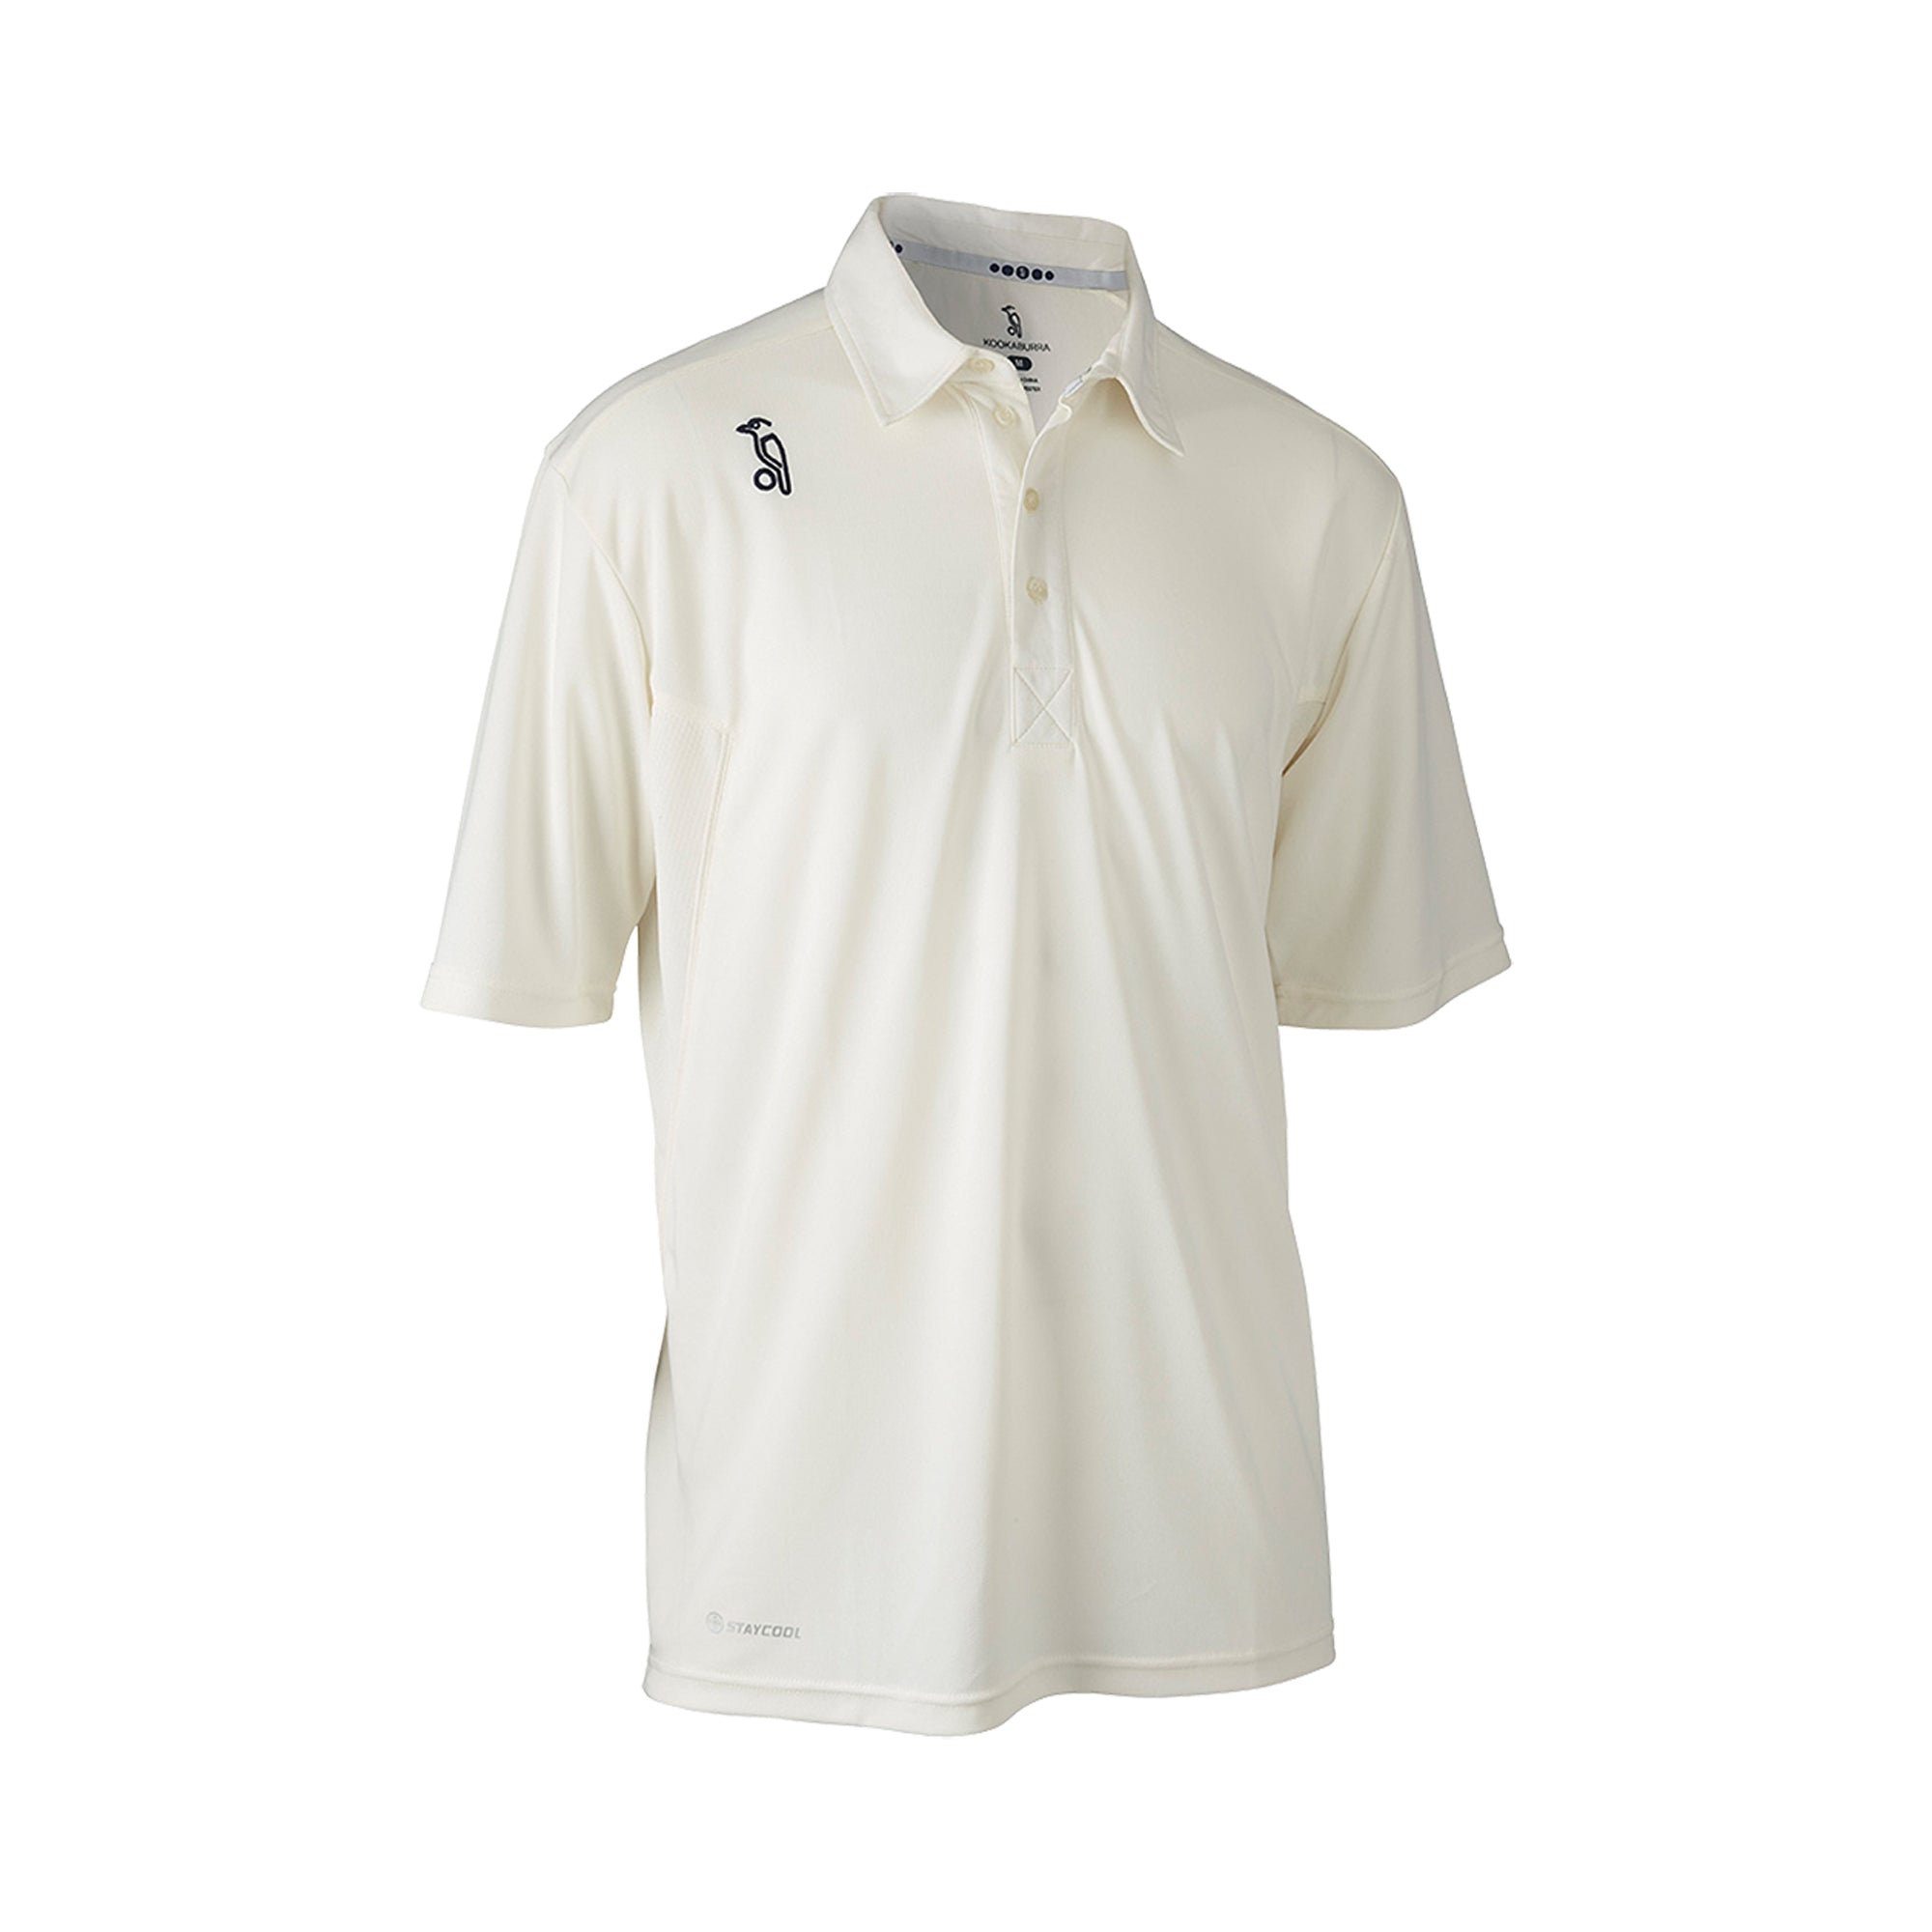 Kookaburra Pro Active Short Sleeve Cricket Playing Shirt